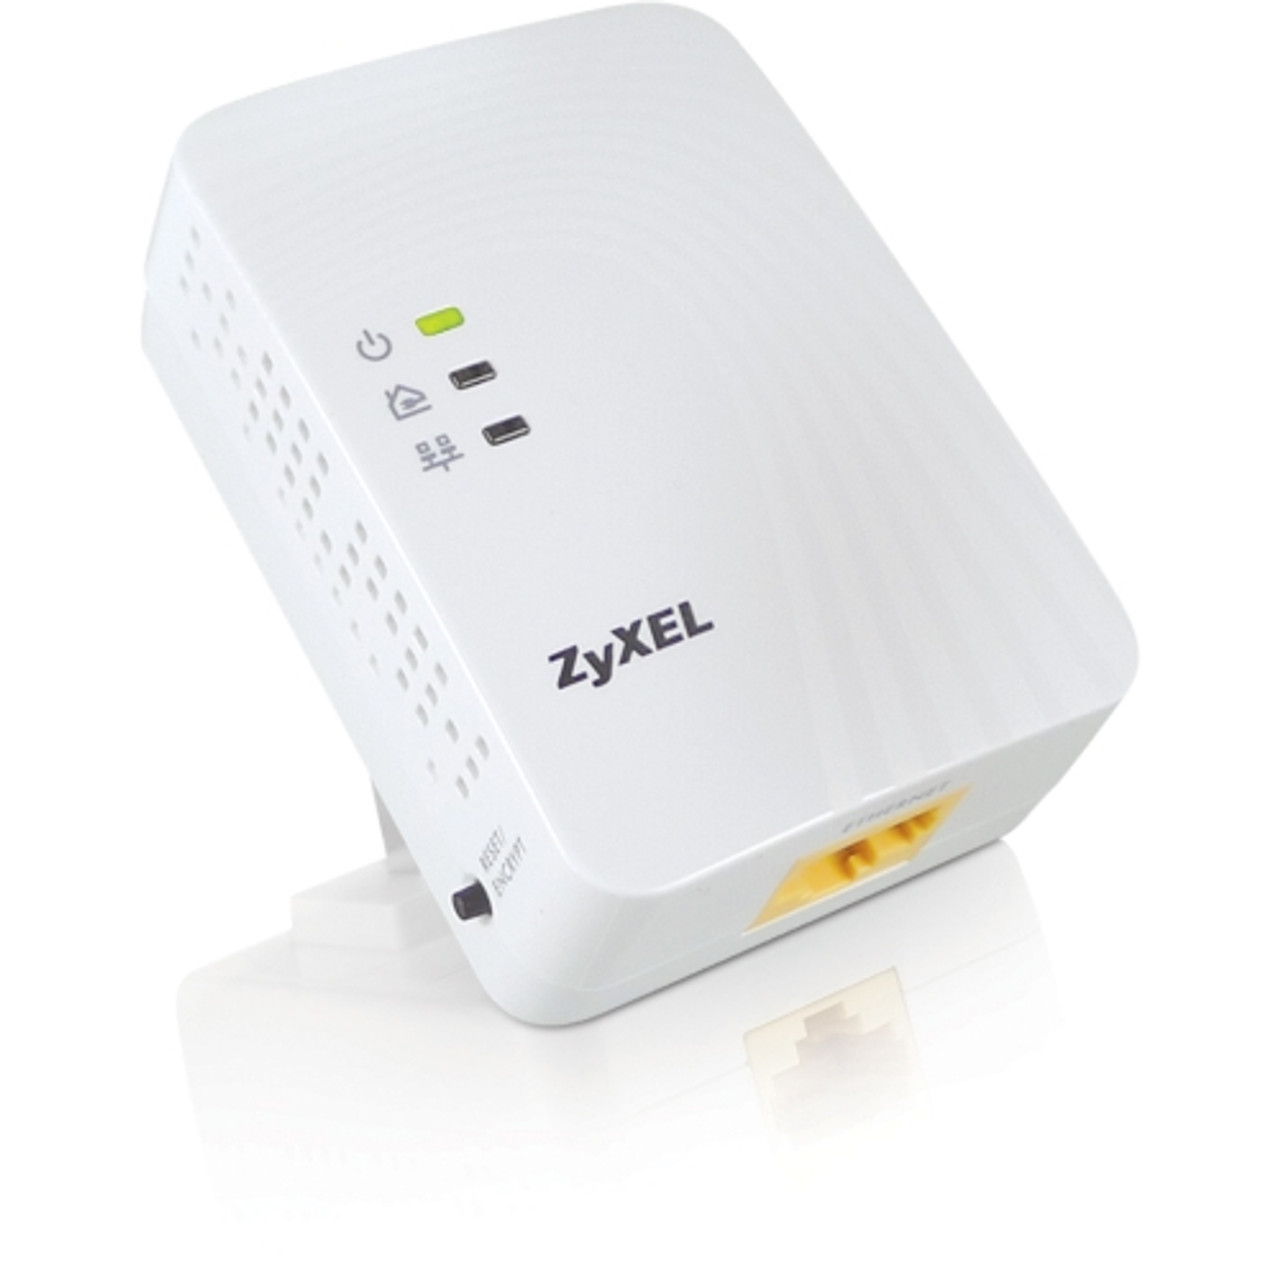 PLA4101 Zyxel 200MBps Powerline Perp Adapter Homeplug Nano Mini